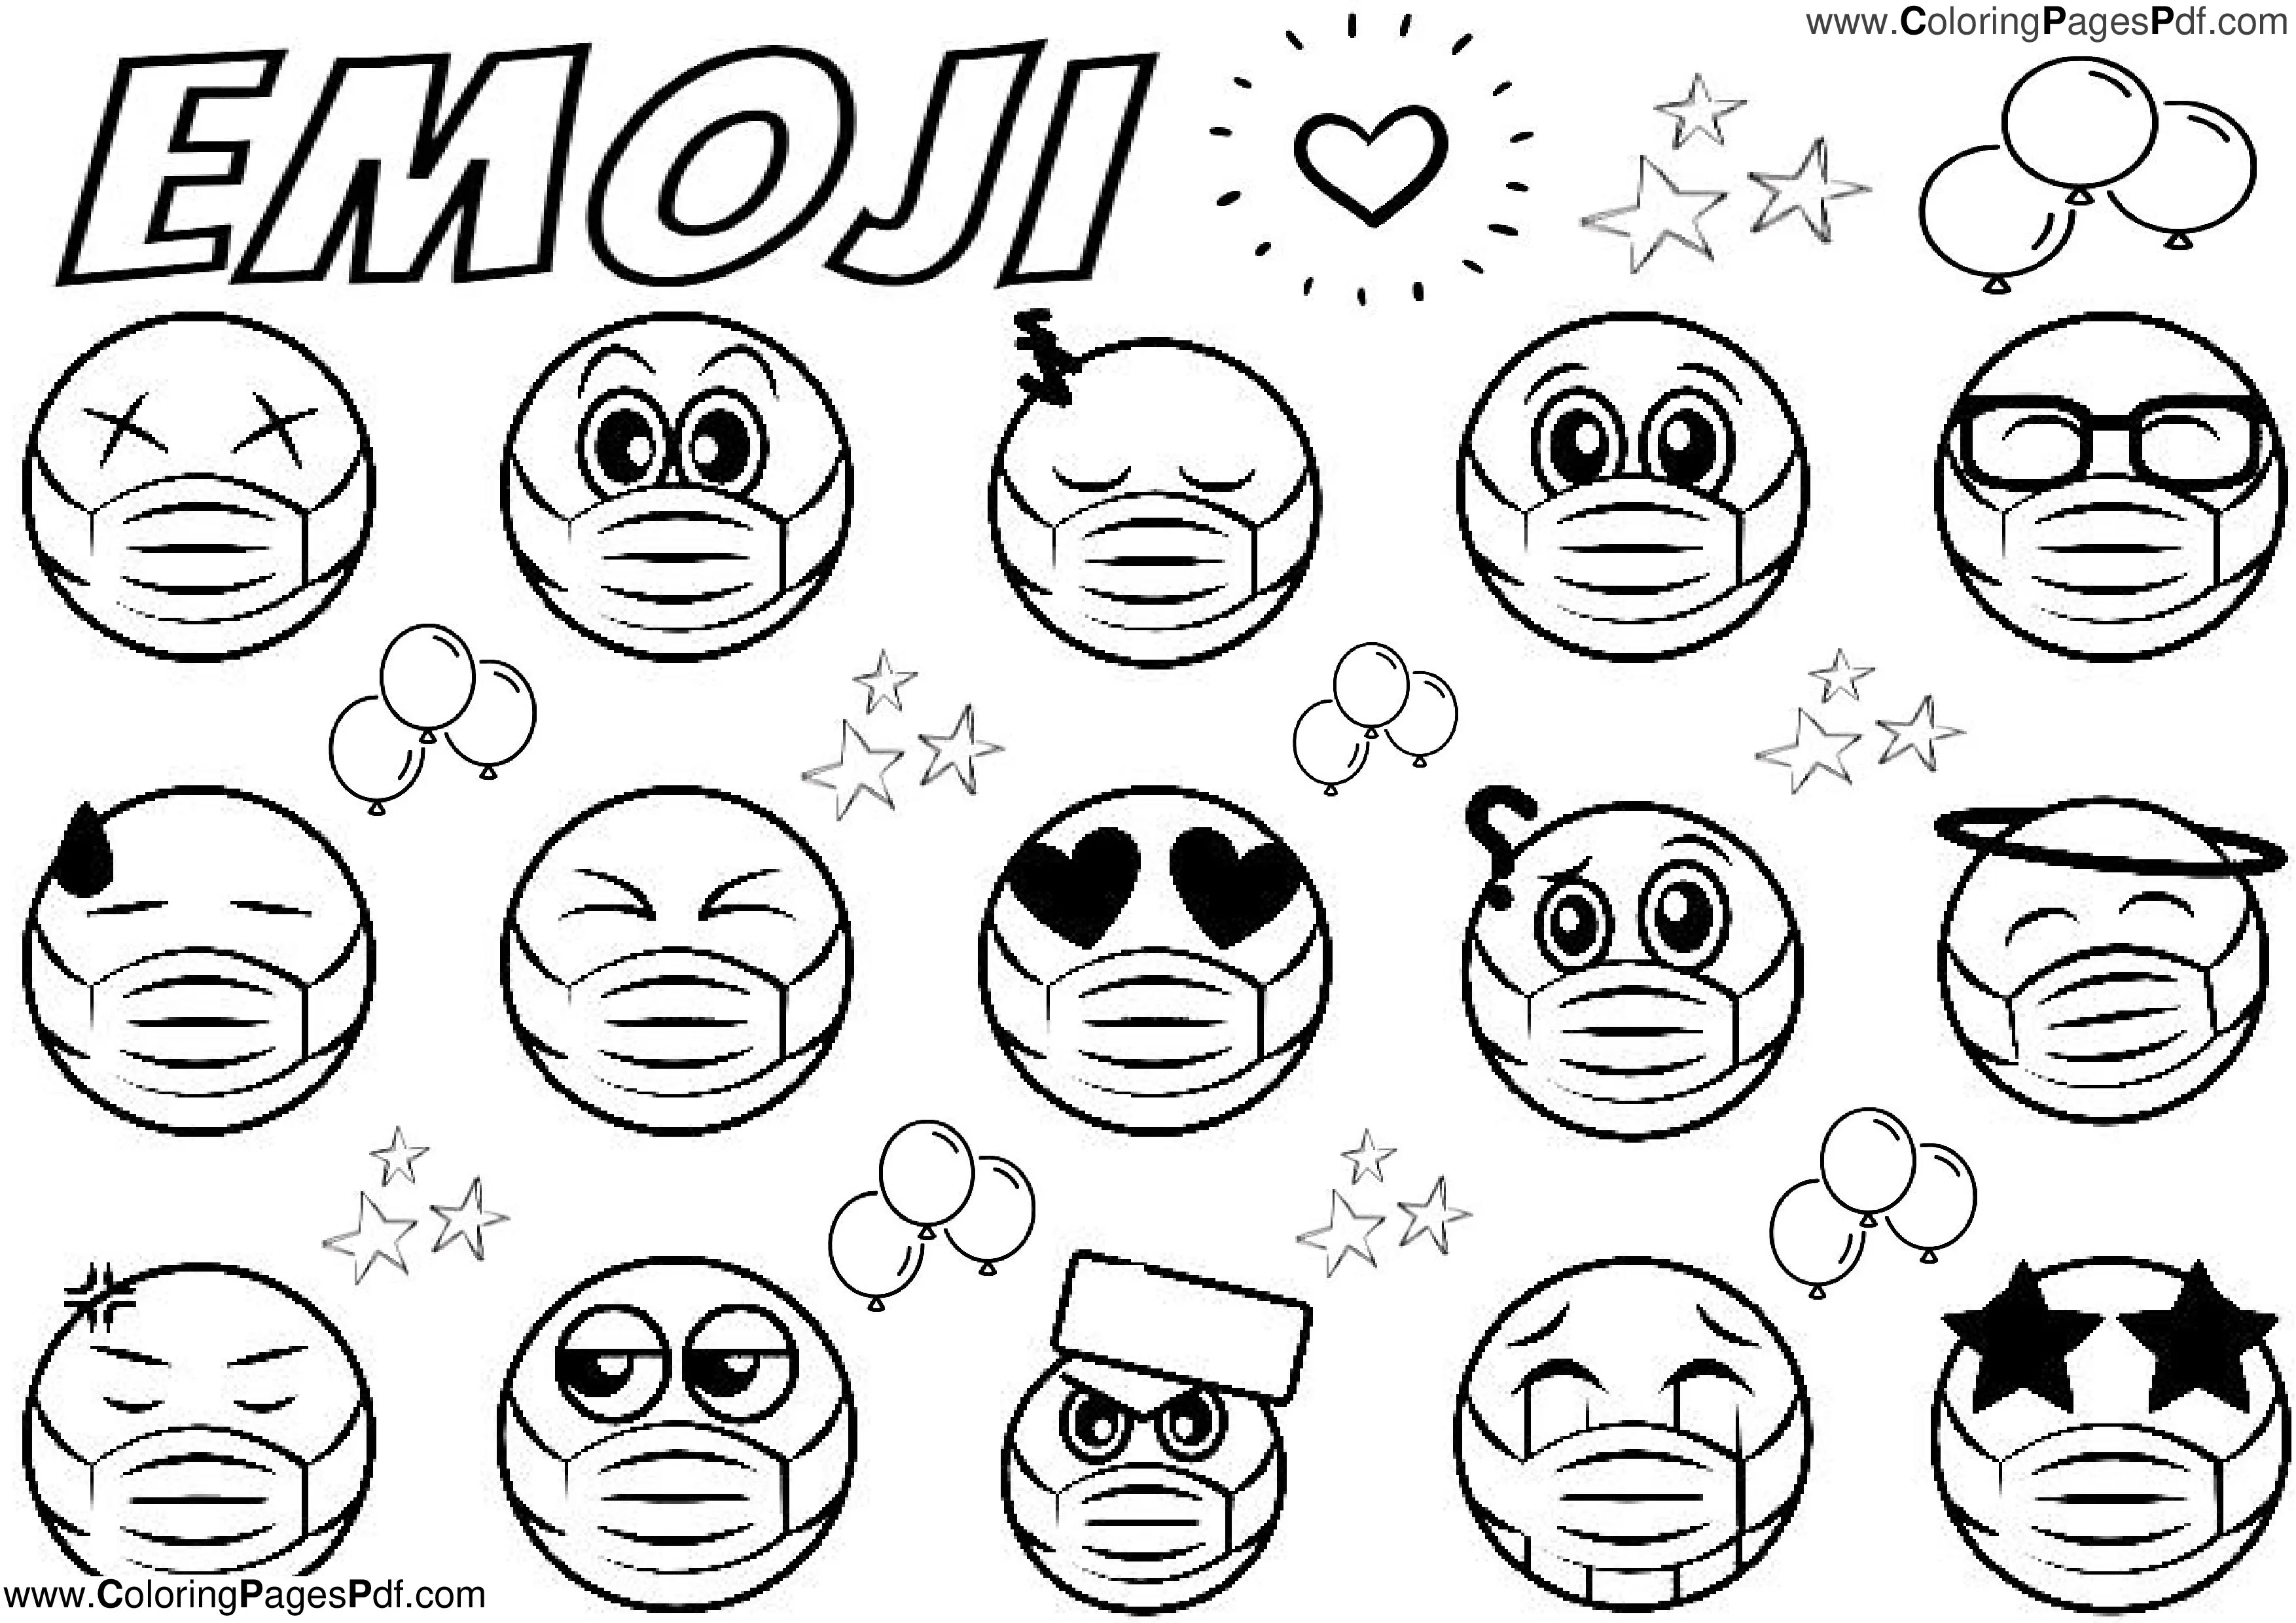 Free emoji coloring pages